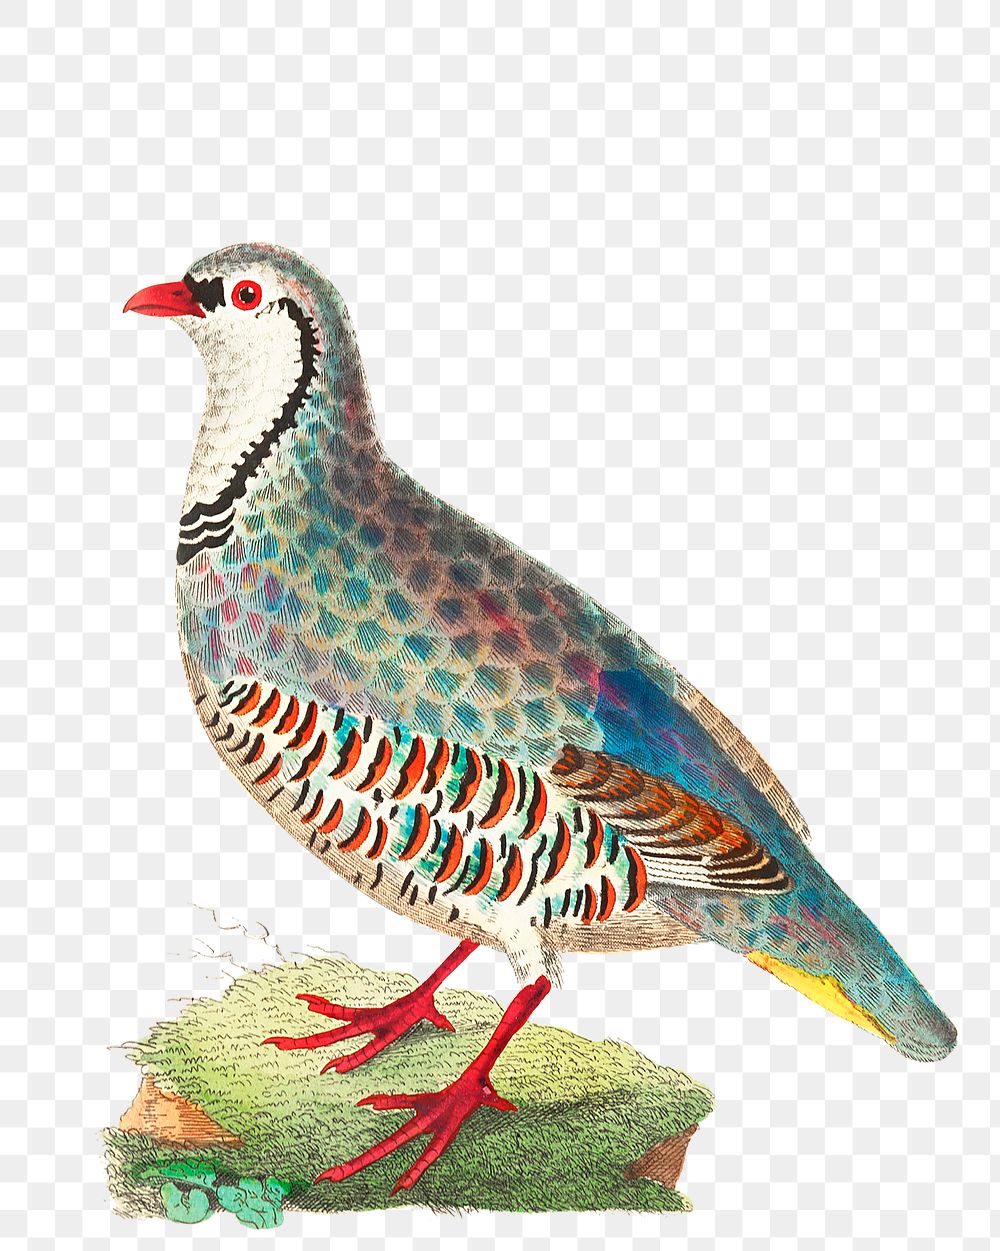 Png hand drawn bird red partridge illustration